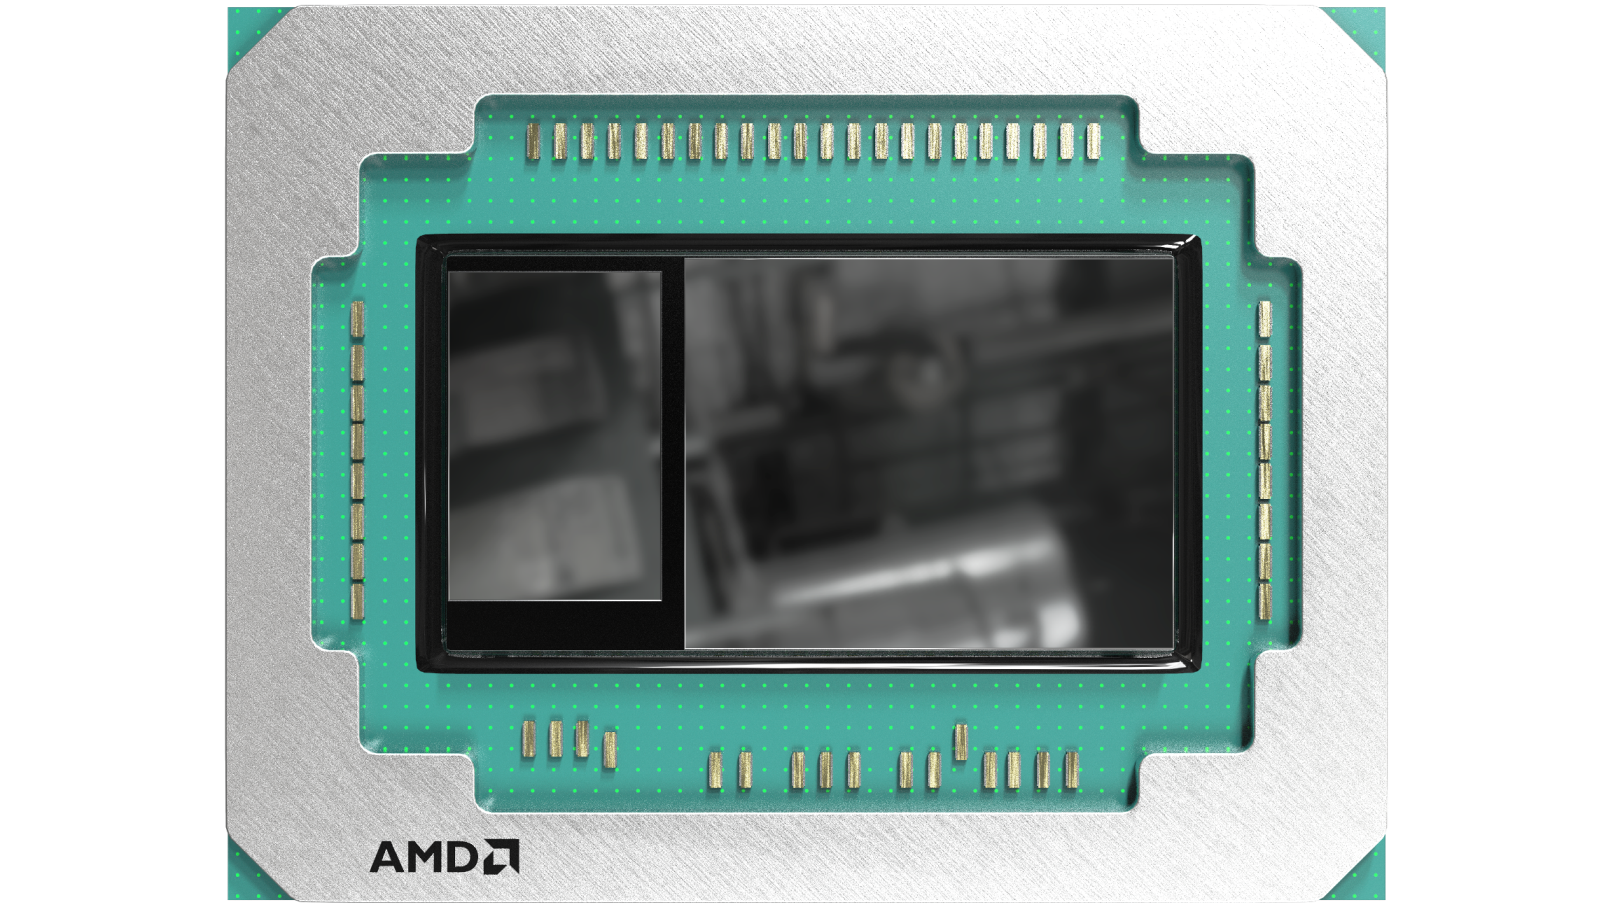 AMD เปิดตัวกราฟิกโปรเซสเซอร์ Radeon Vega Mobile มอบสมรรถนะการแสดงผลที่โดดเด่นด้านครีเอทีฟ